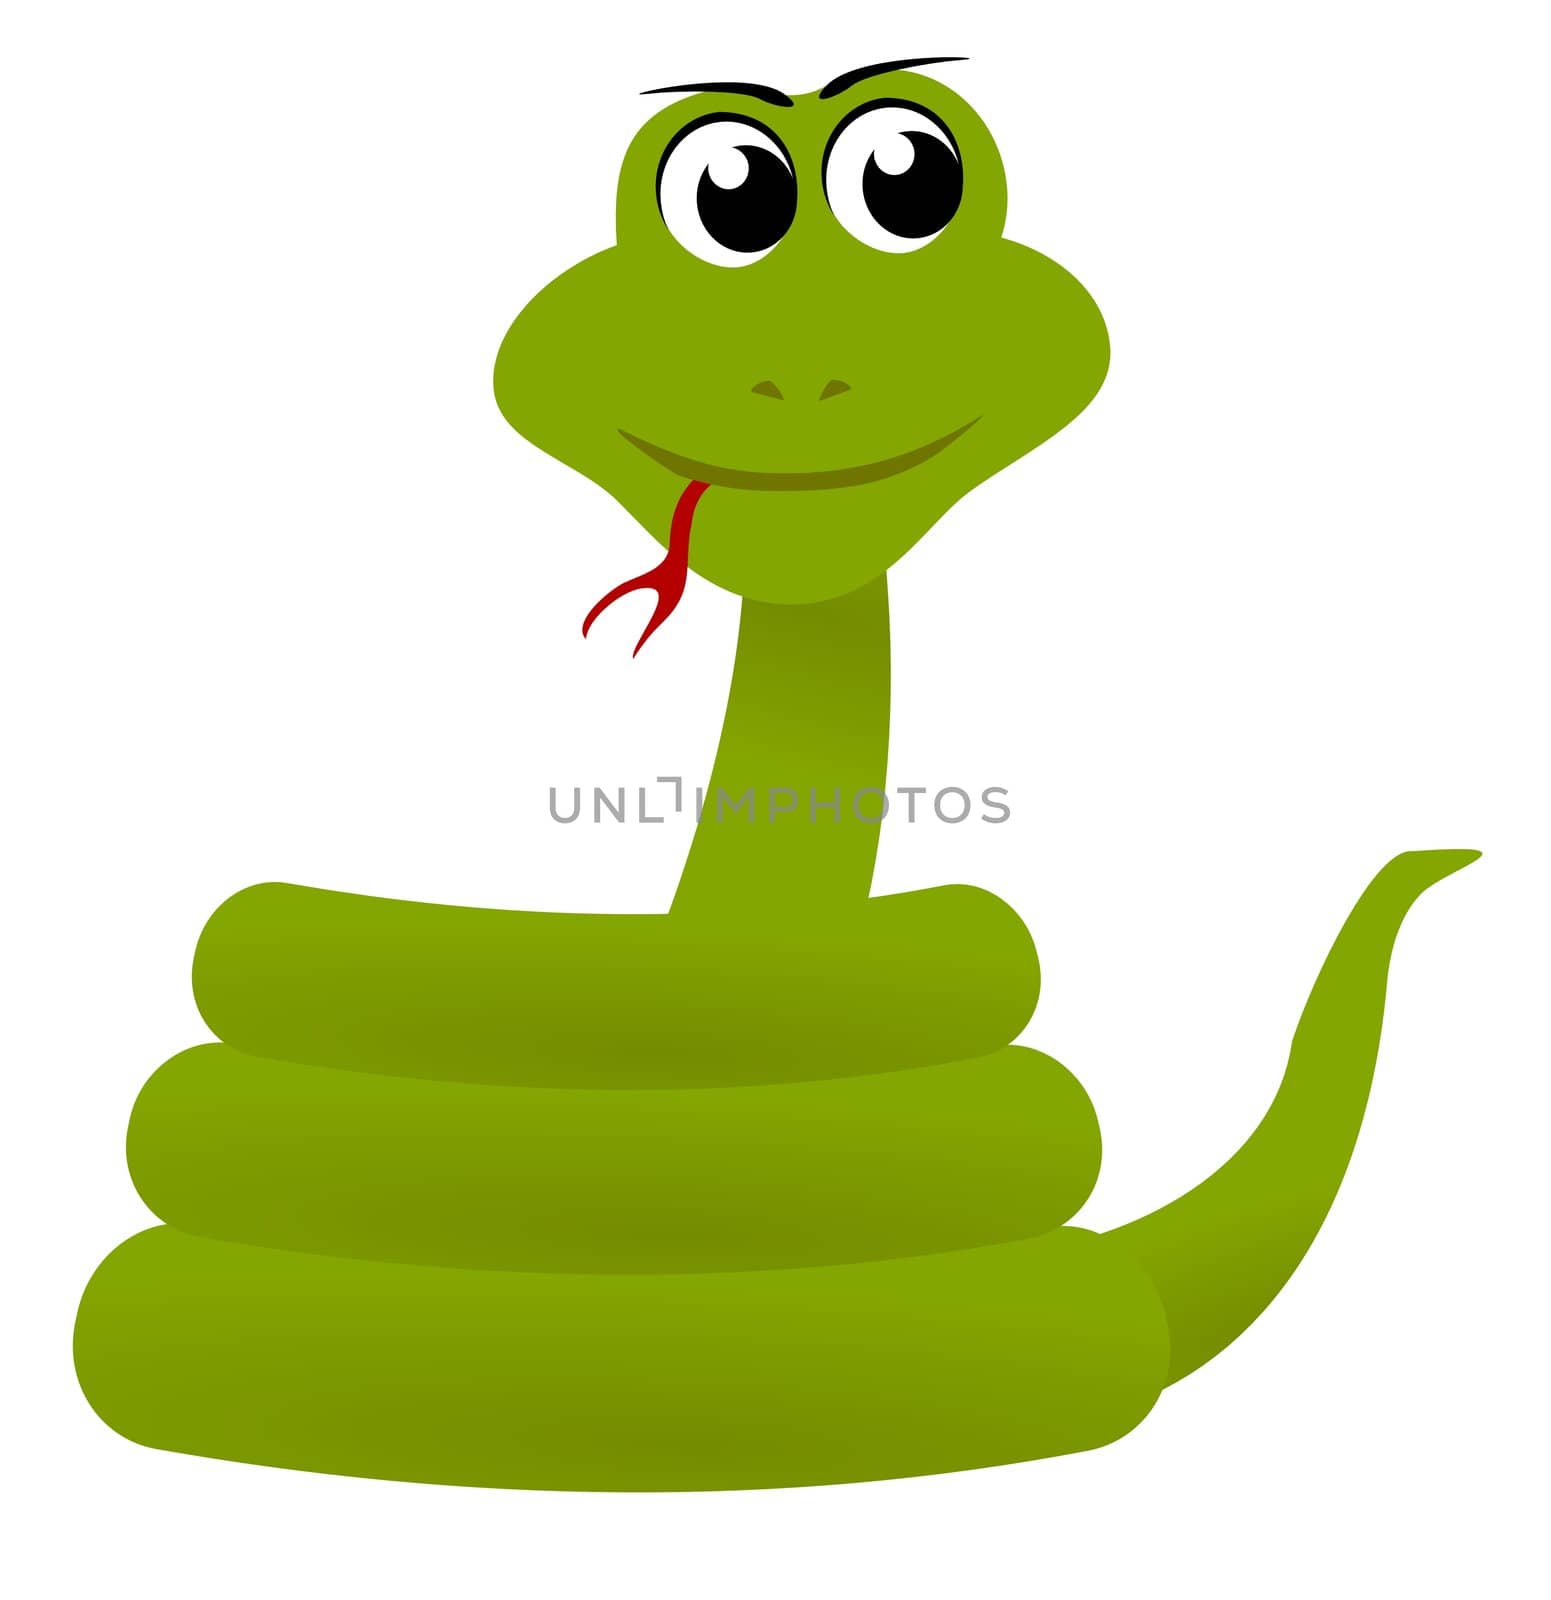 Illustration of an isolated cartoon snake